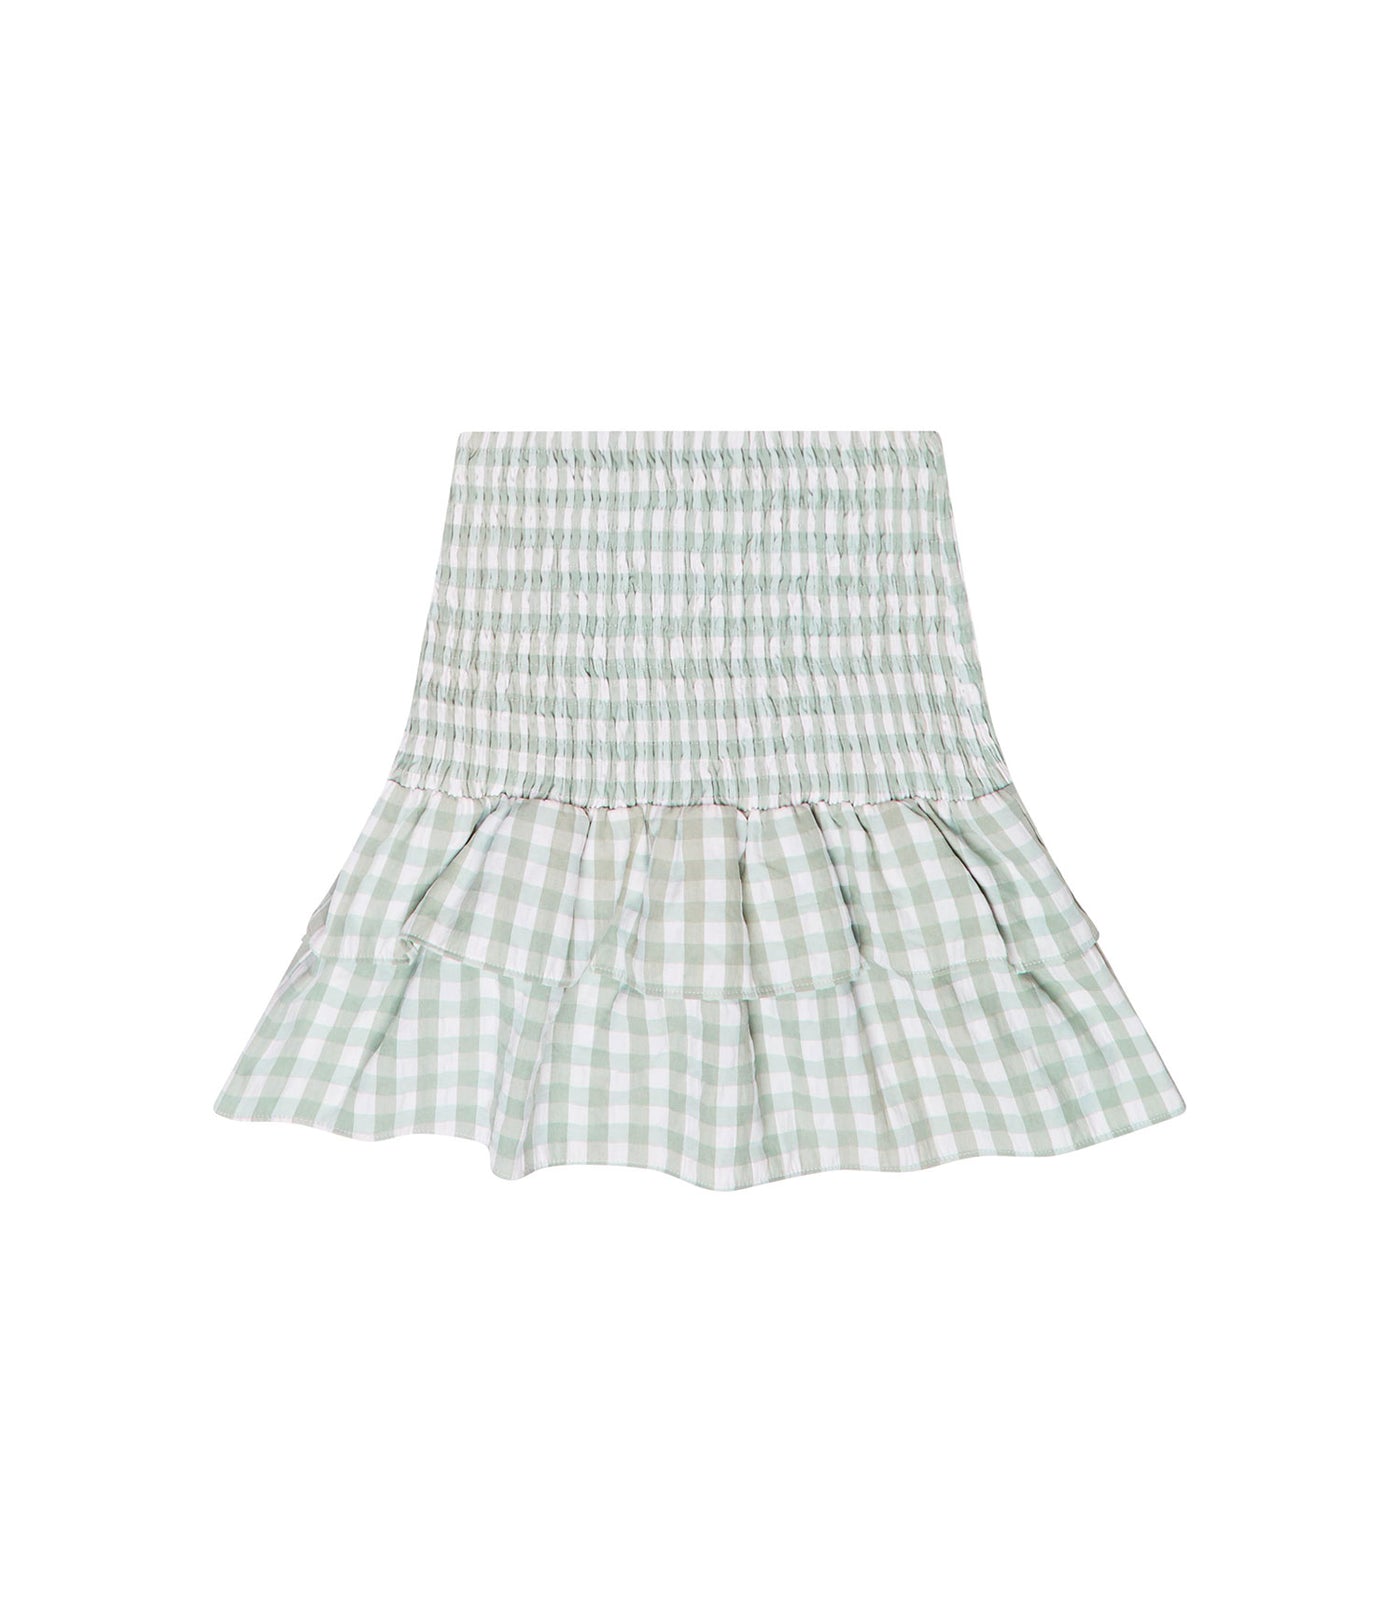 Green and white gingham skirt